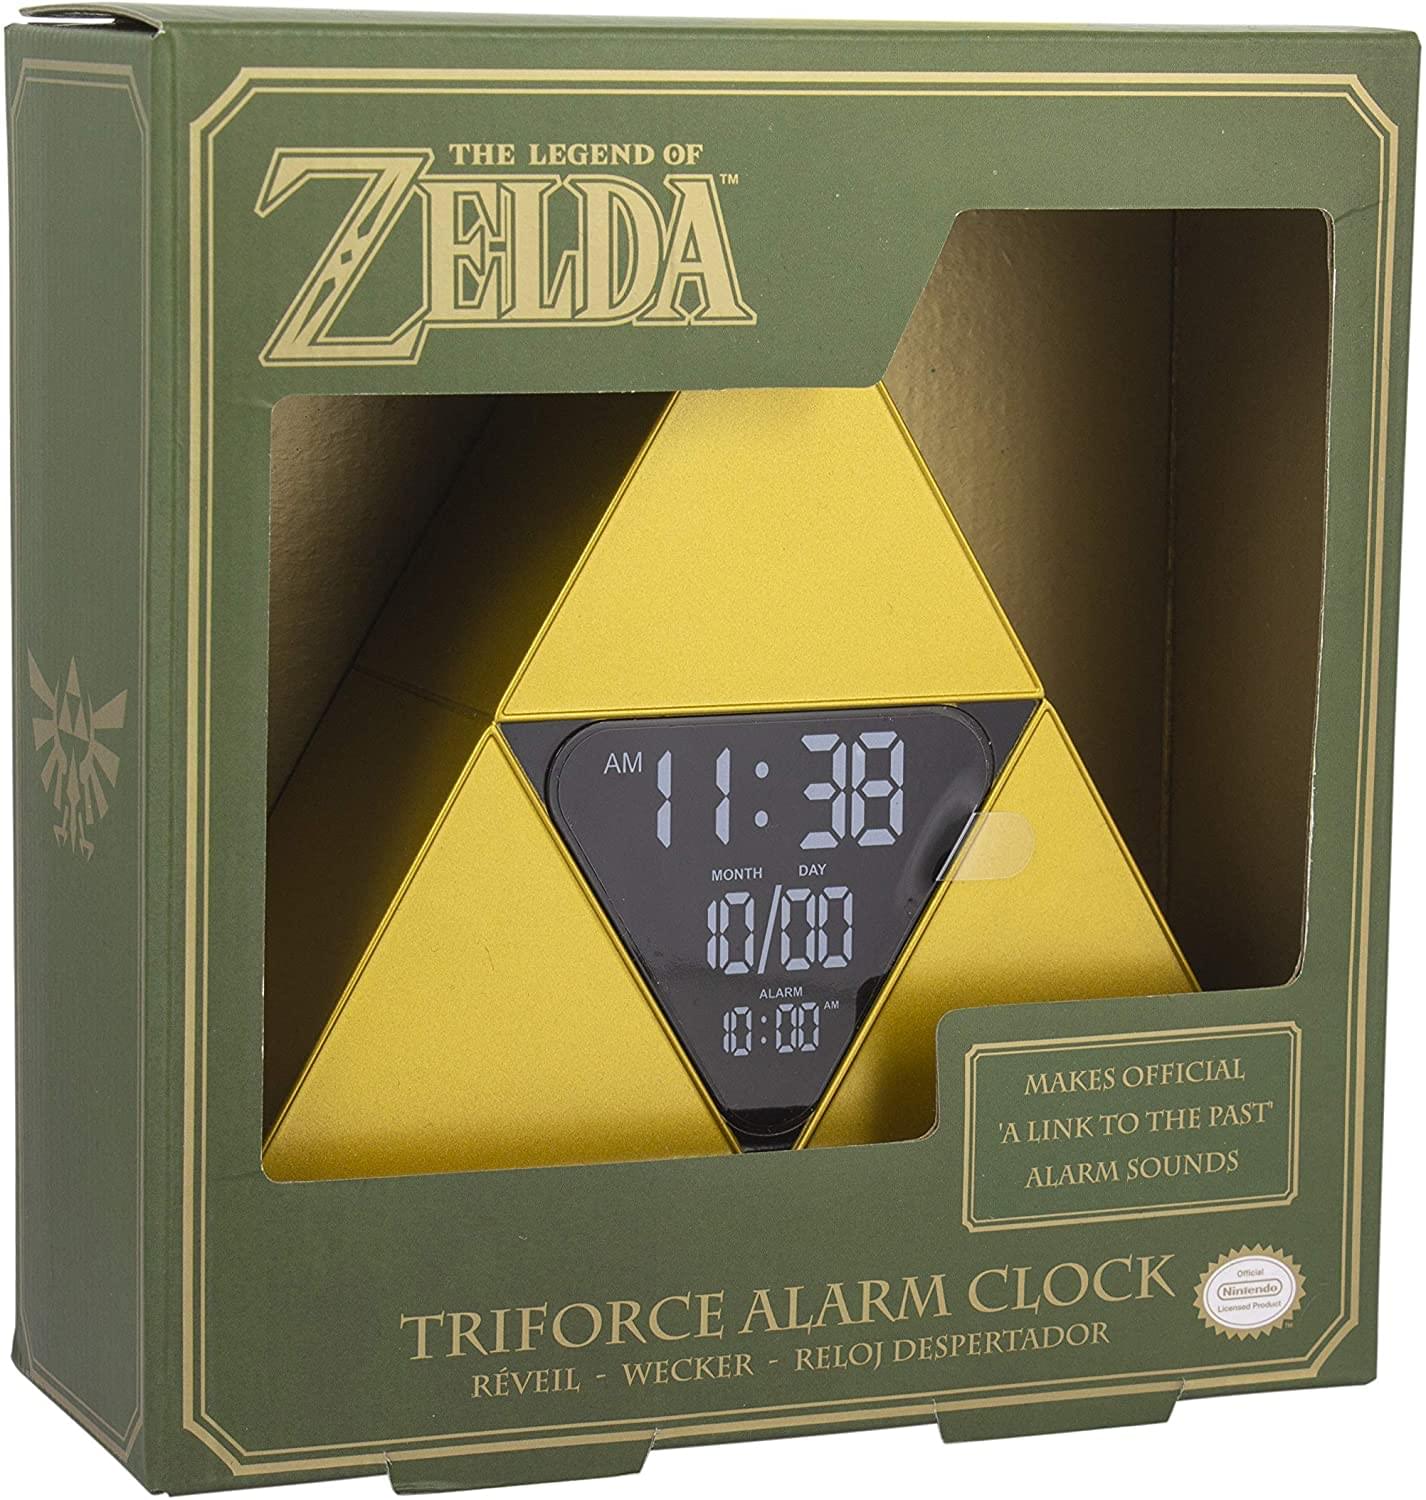 The Legend of Zelda Triforce USB Digital Alarm Clock